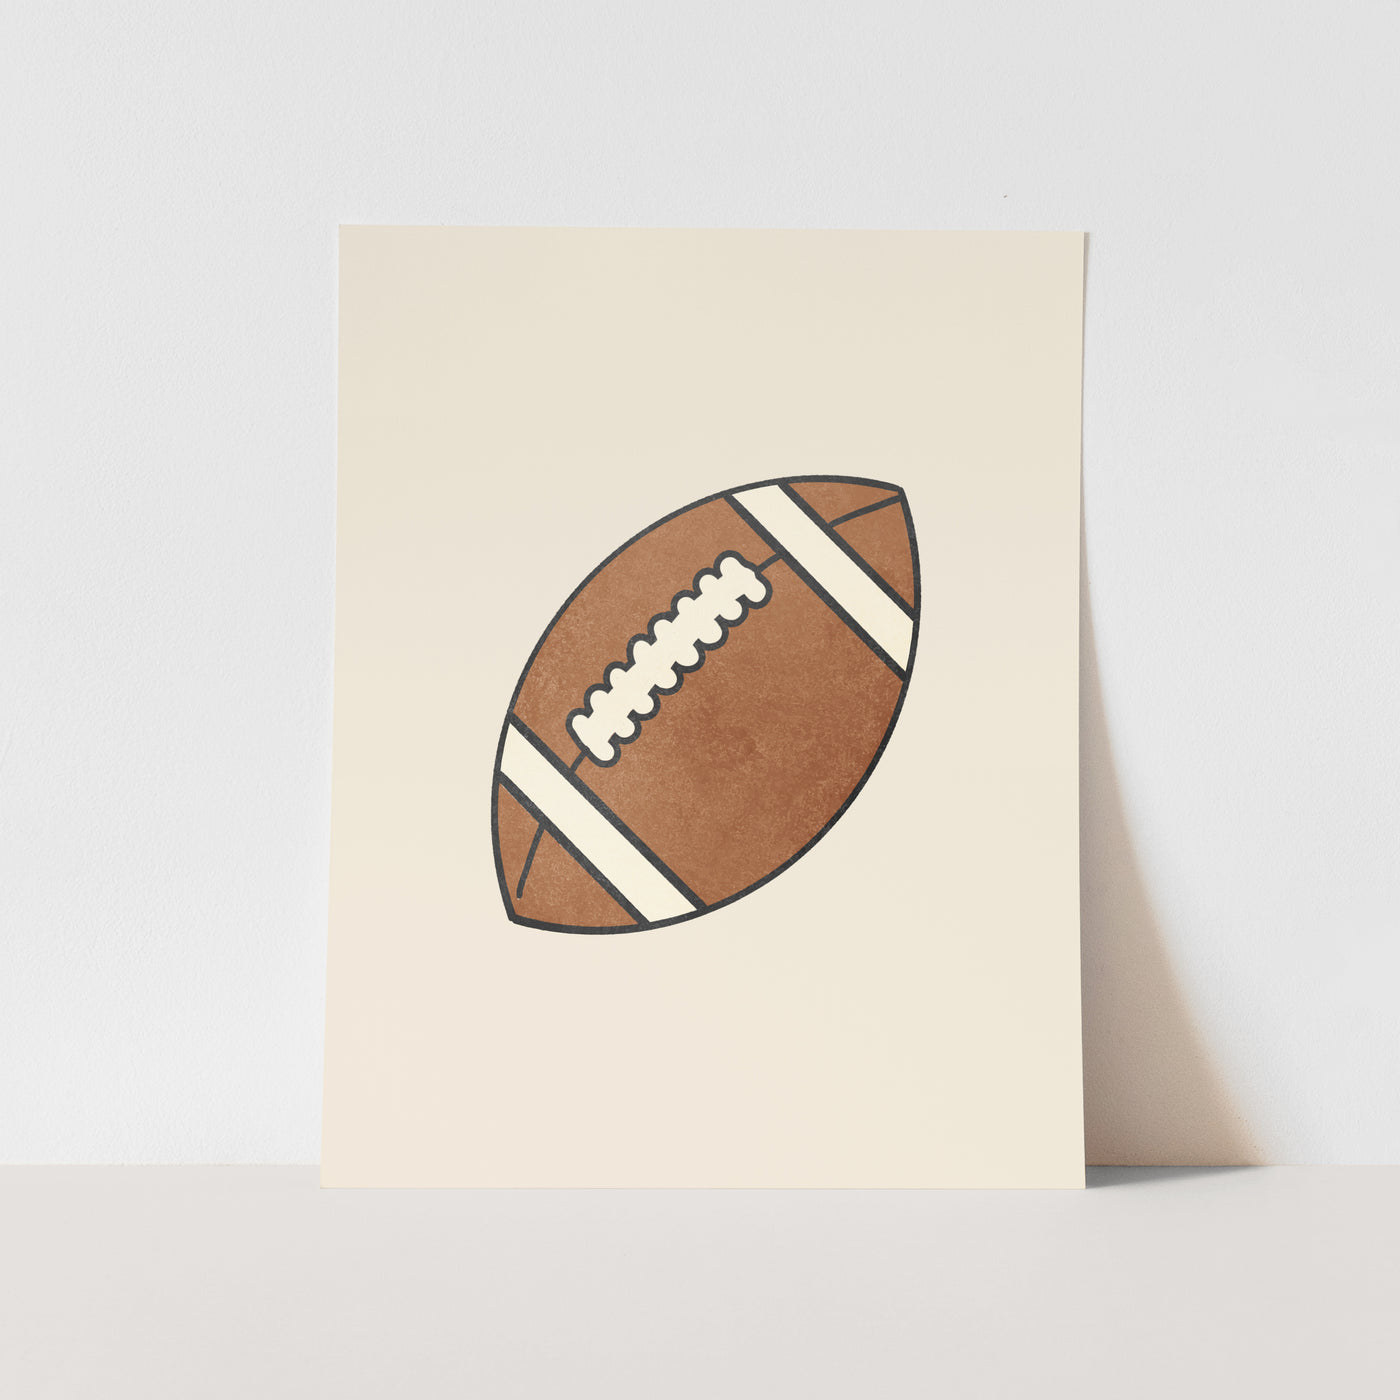 Art Print: Just a Football